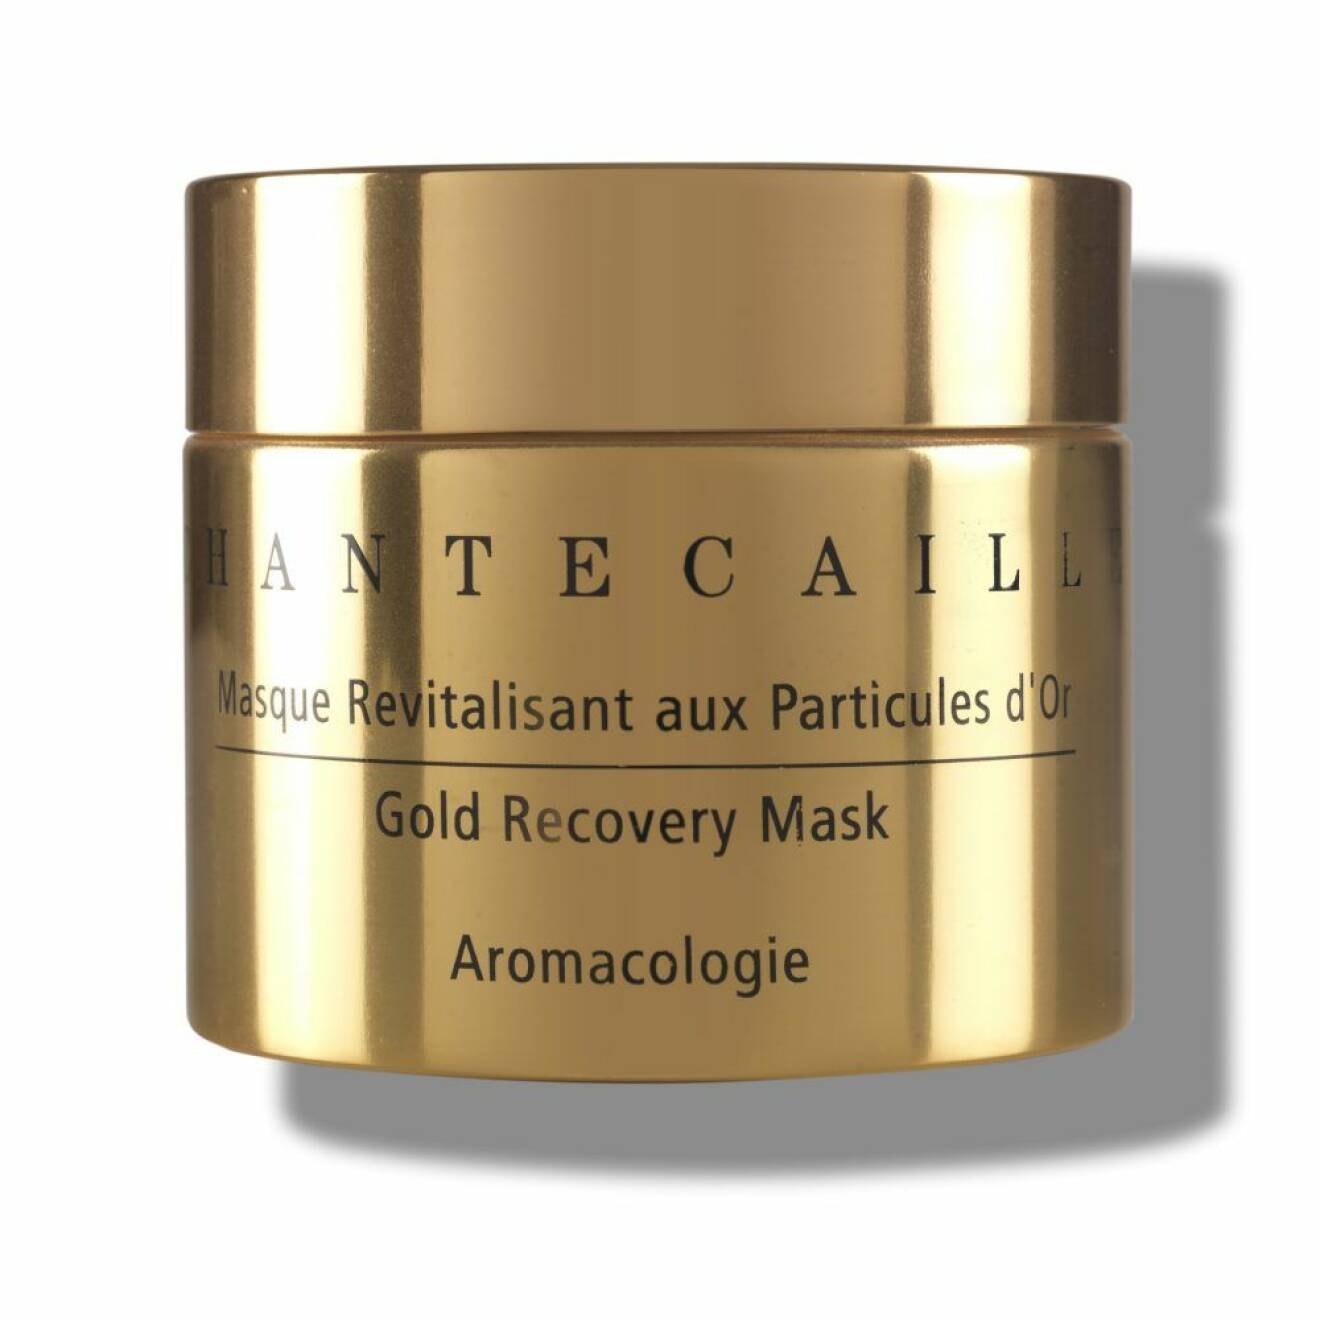 Gold recovery mask från Chantecaille.